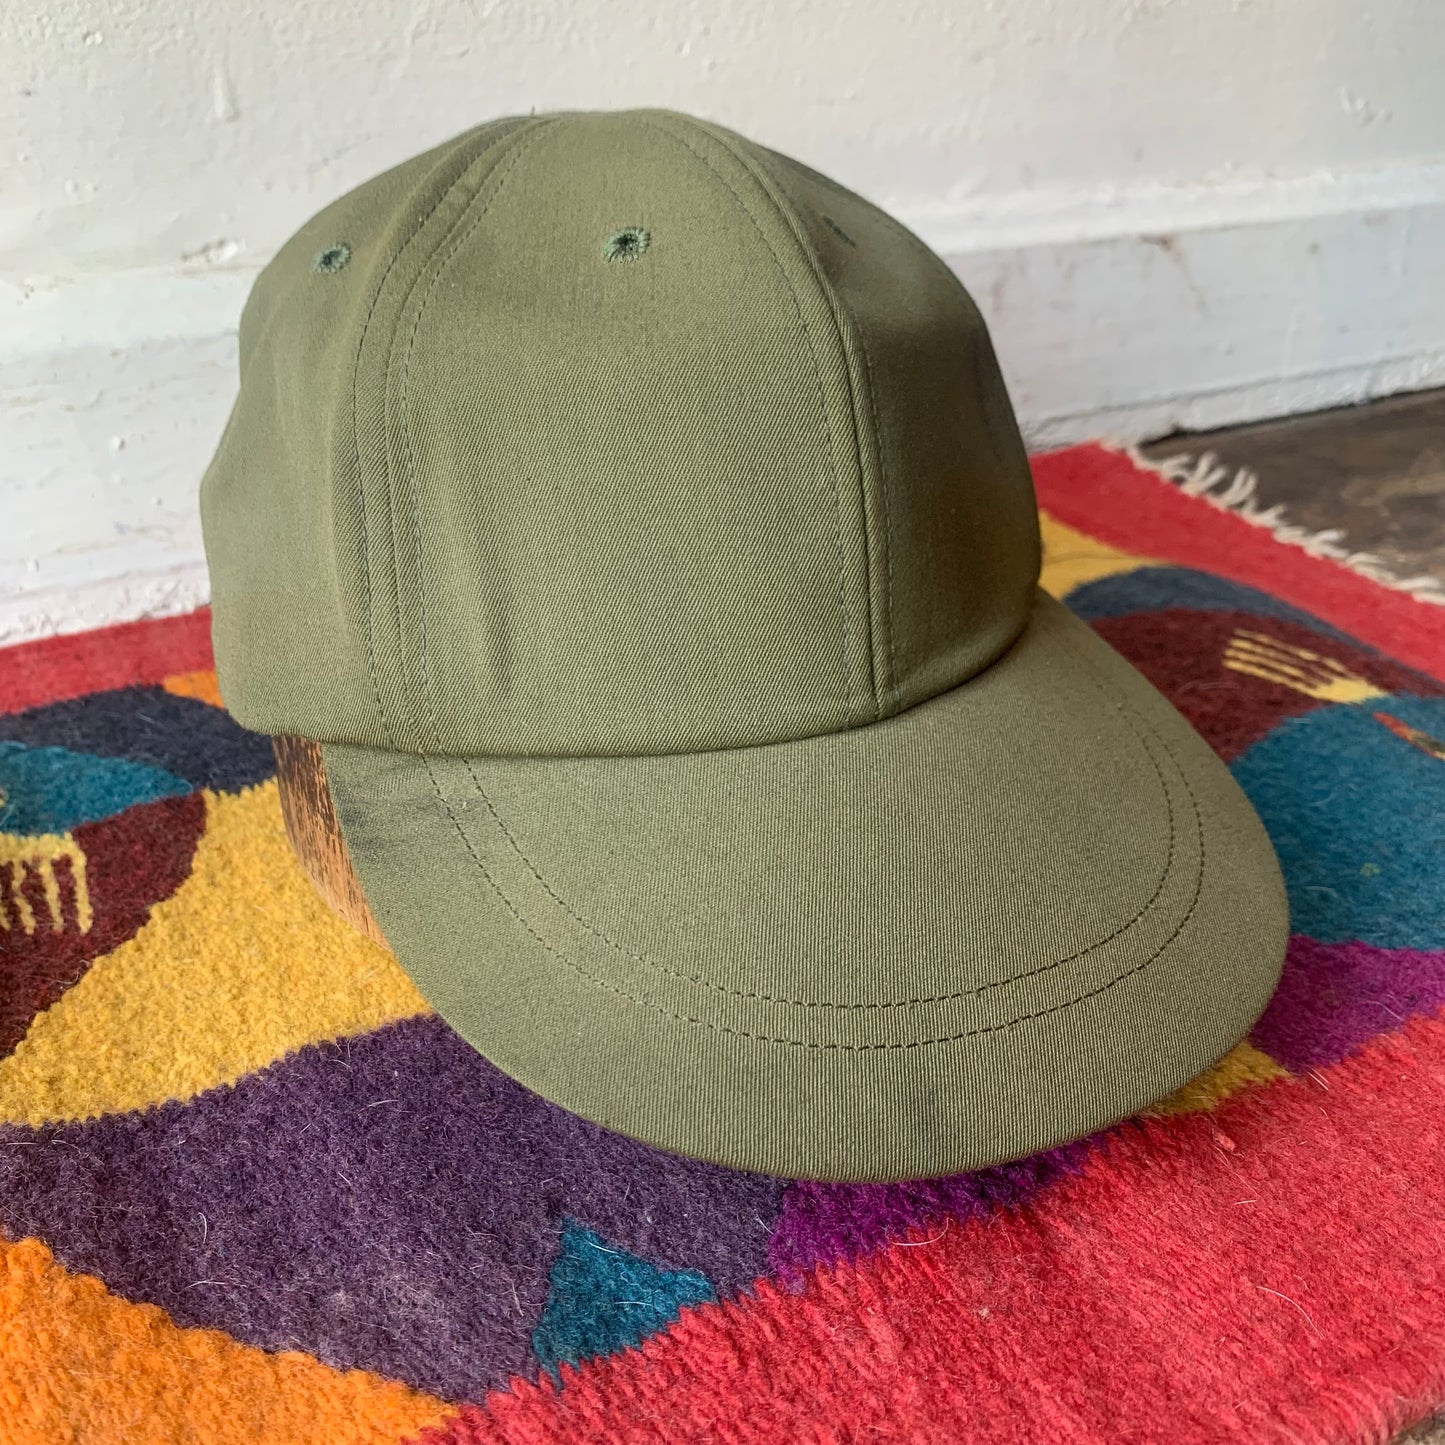 1970s Army Green Cap